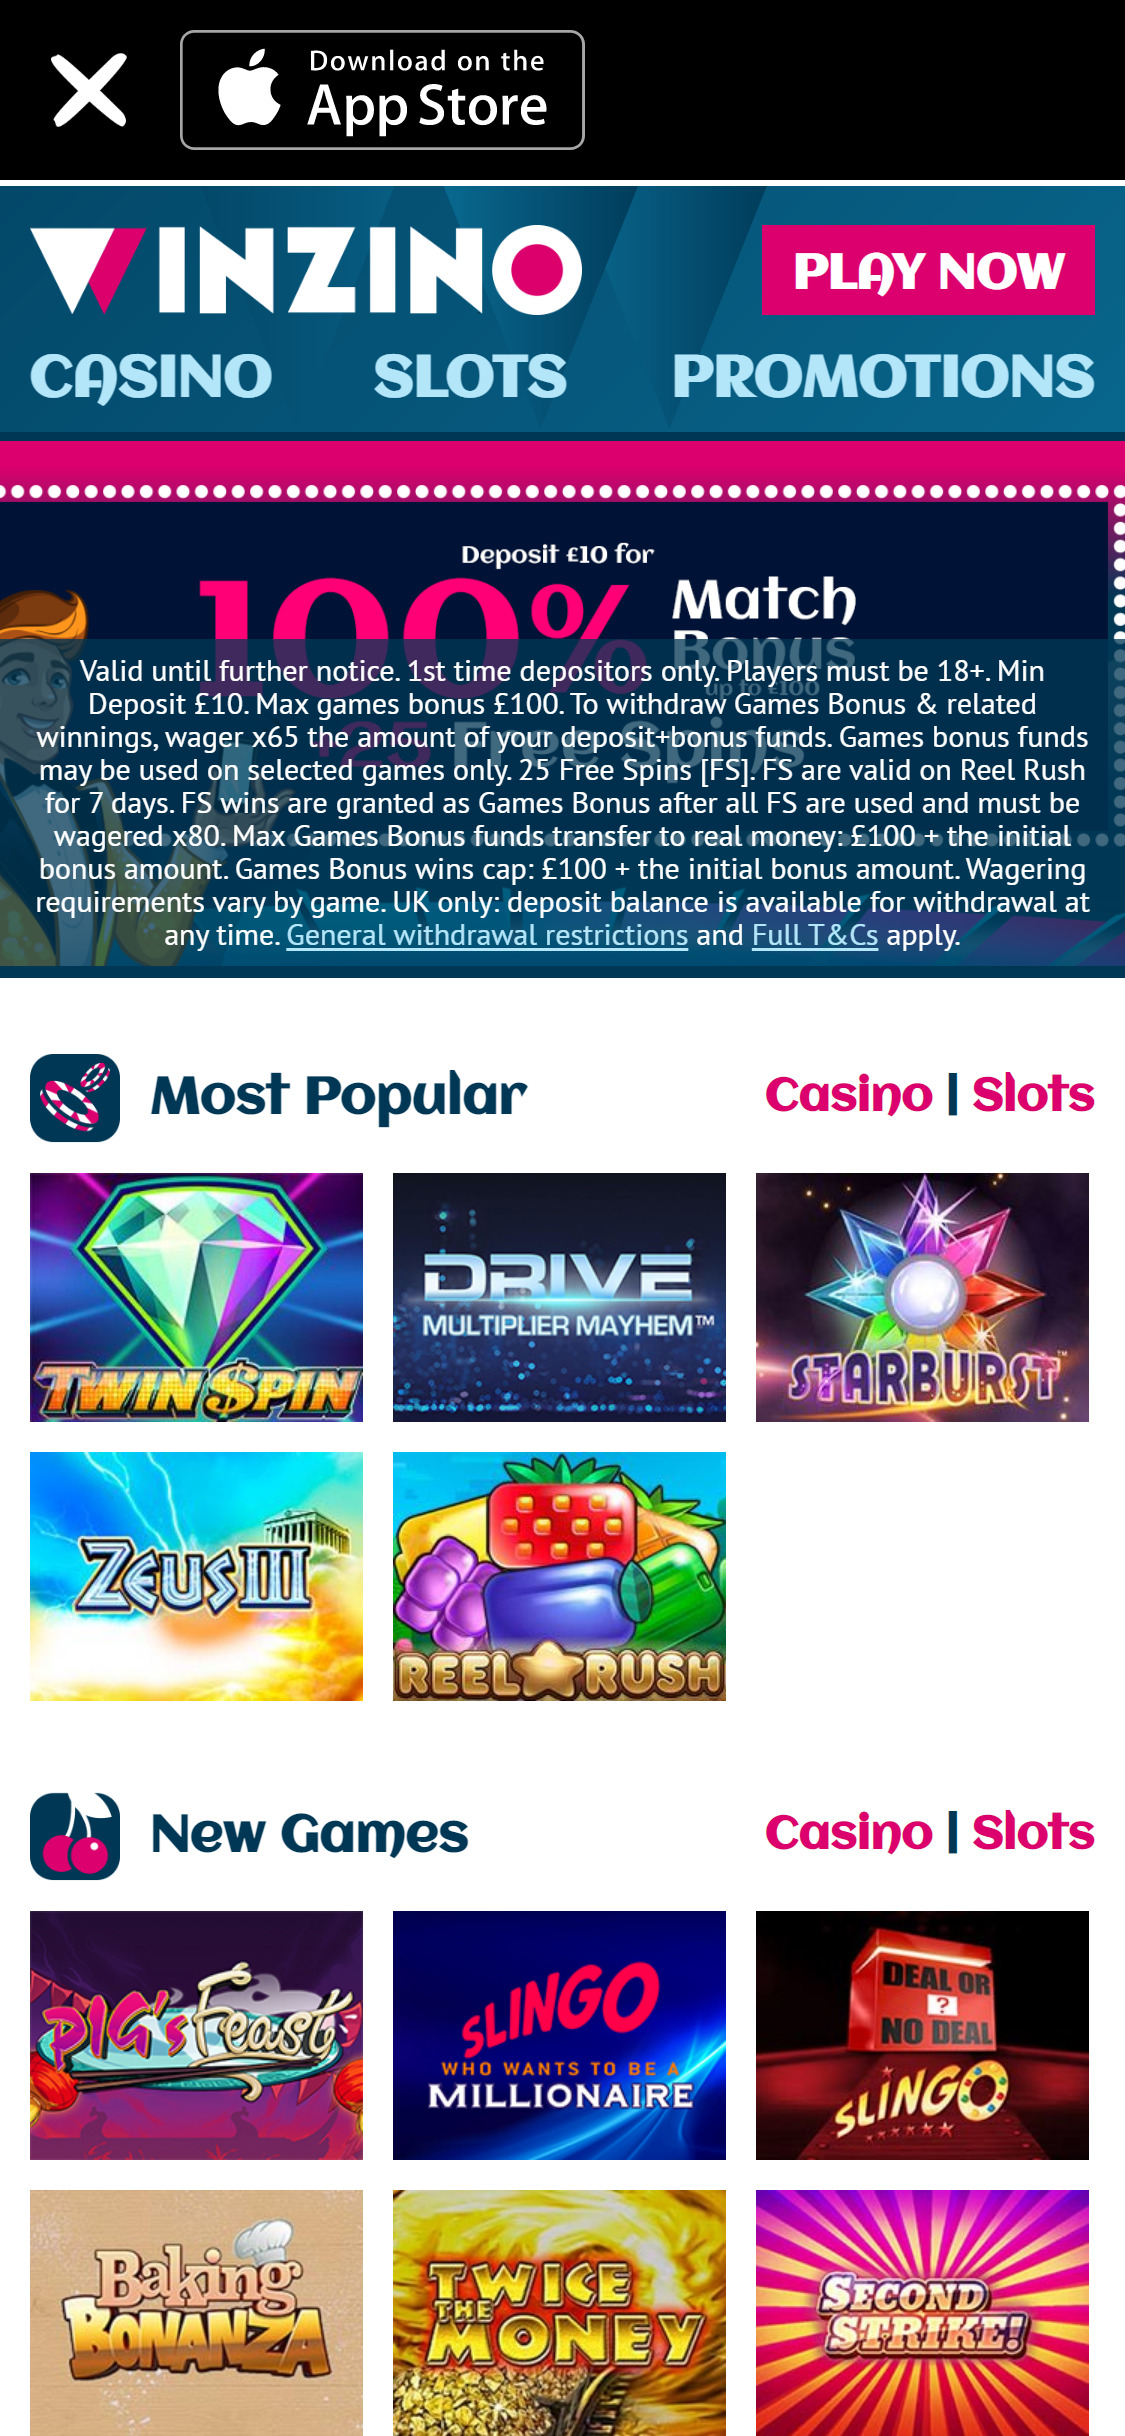 Winzino Casino Mobile Review